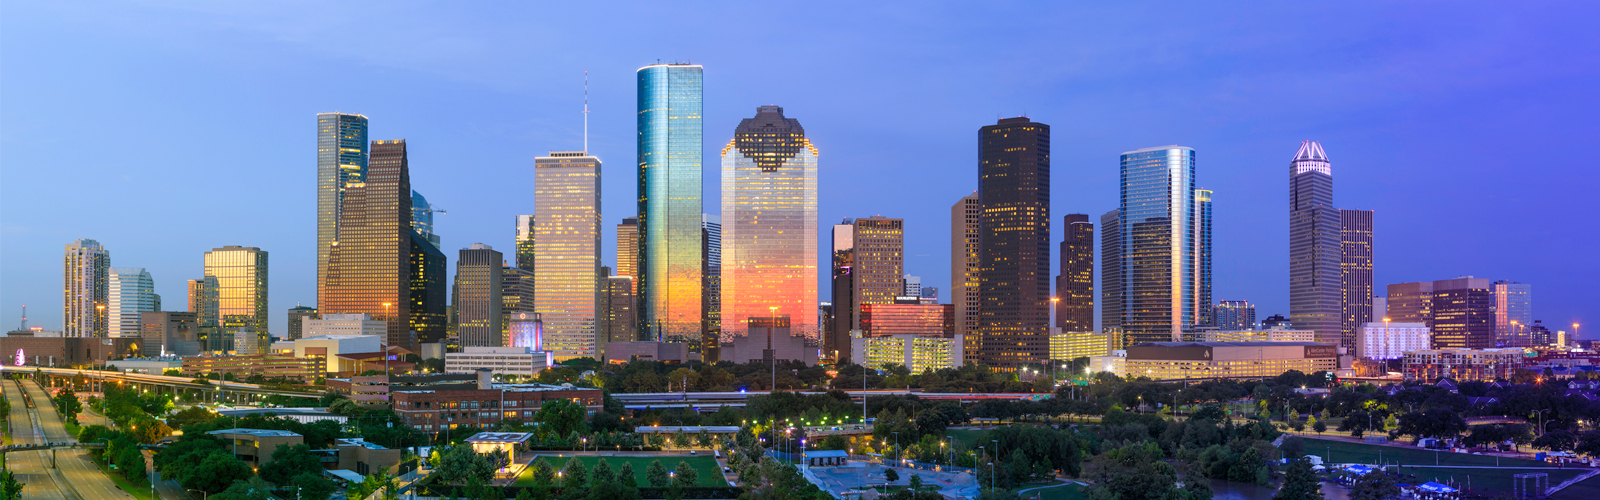 the city of Houston where custom software development is popular